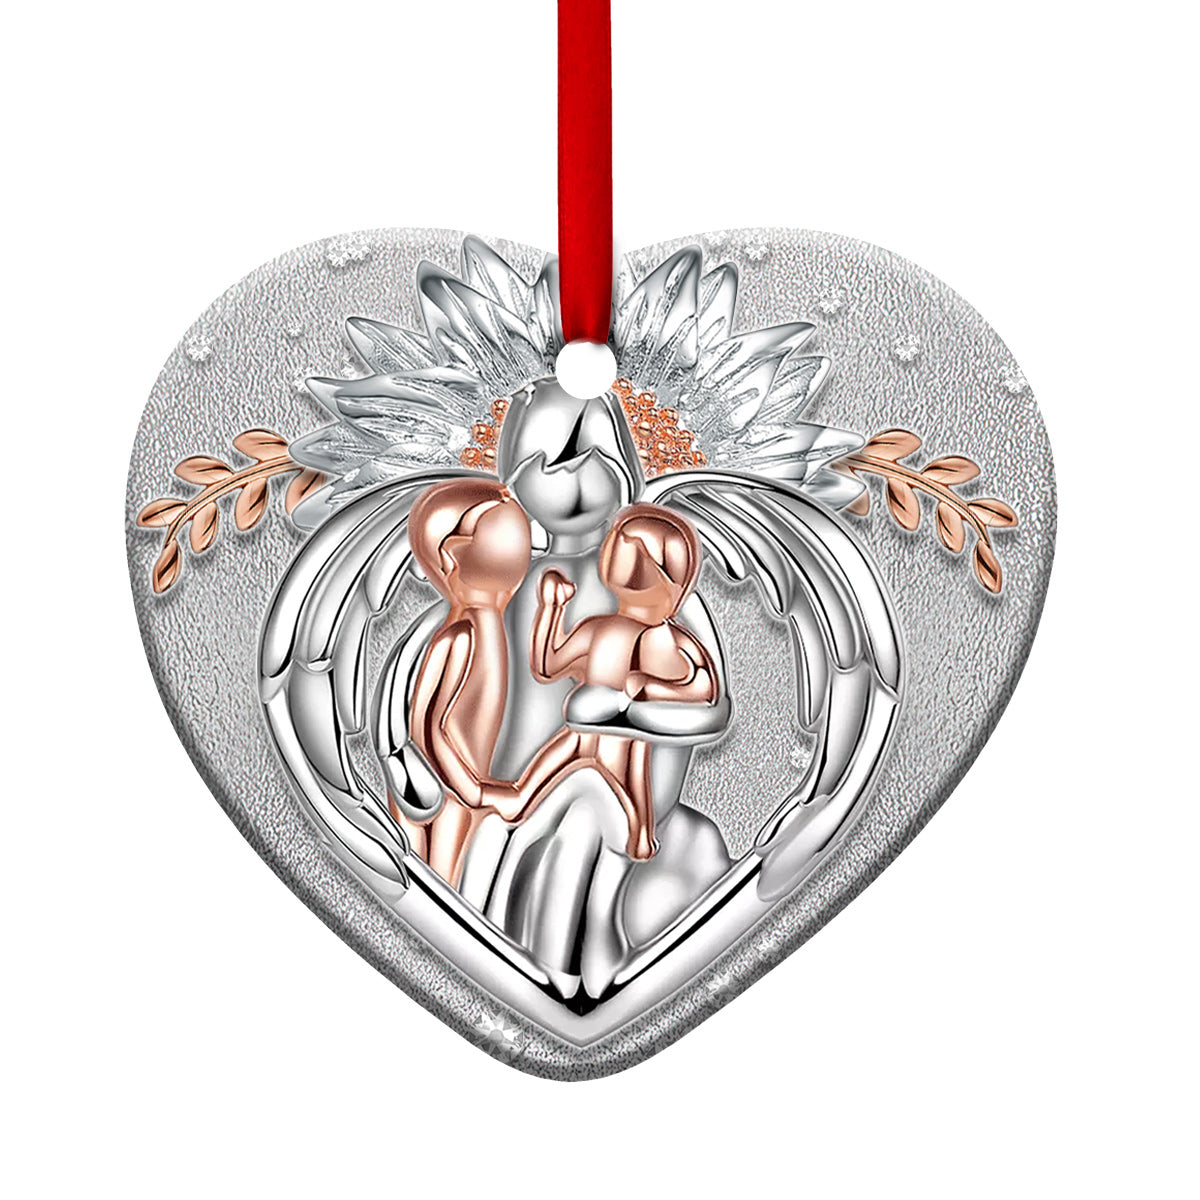 Nbc Angel 3 Heart Ceramic Ornament - Christmas Ornament - Christmas Gift